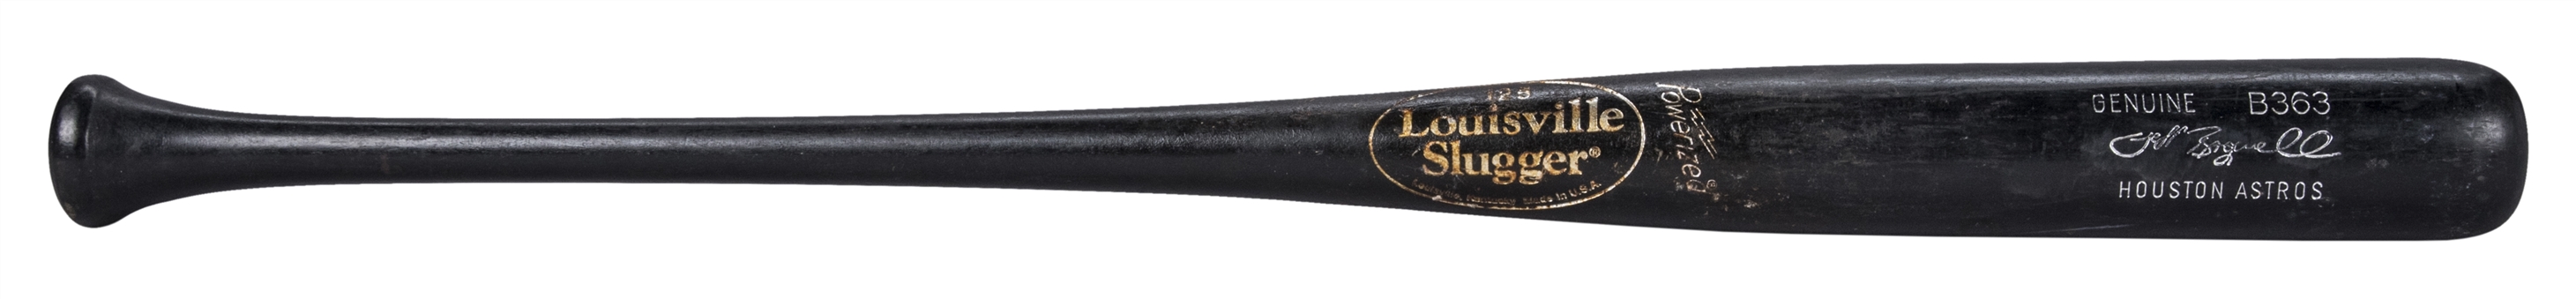 2001-2002 Jeff Bagwell Game Used Louisville Slugger B363 Model Bat (PSA/DNA GU 8)